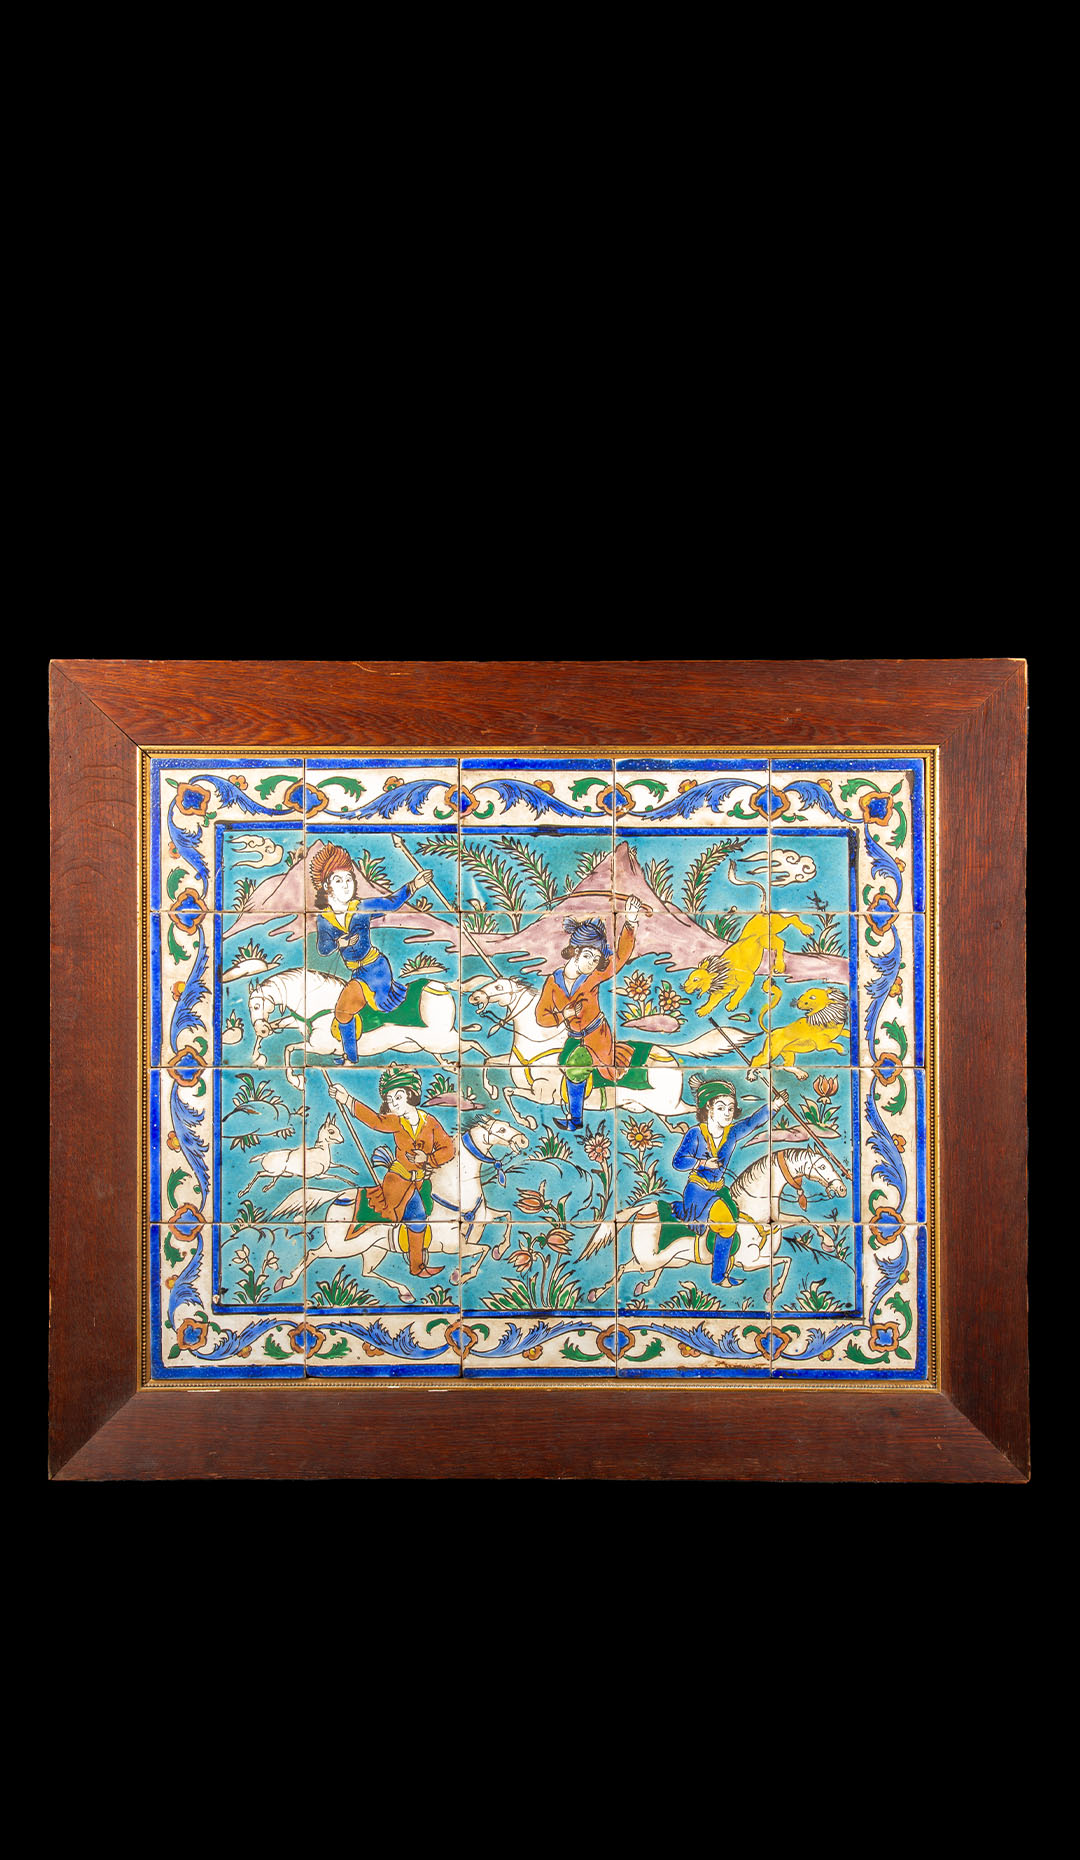 Lion Hunt: 19 Century Glazed Ceramic Panel from Qajar Iran